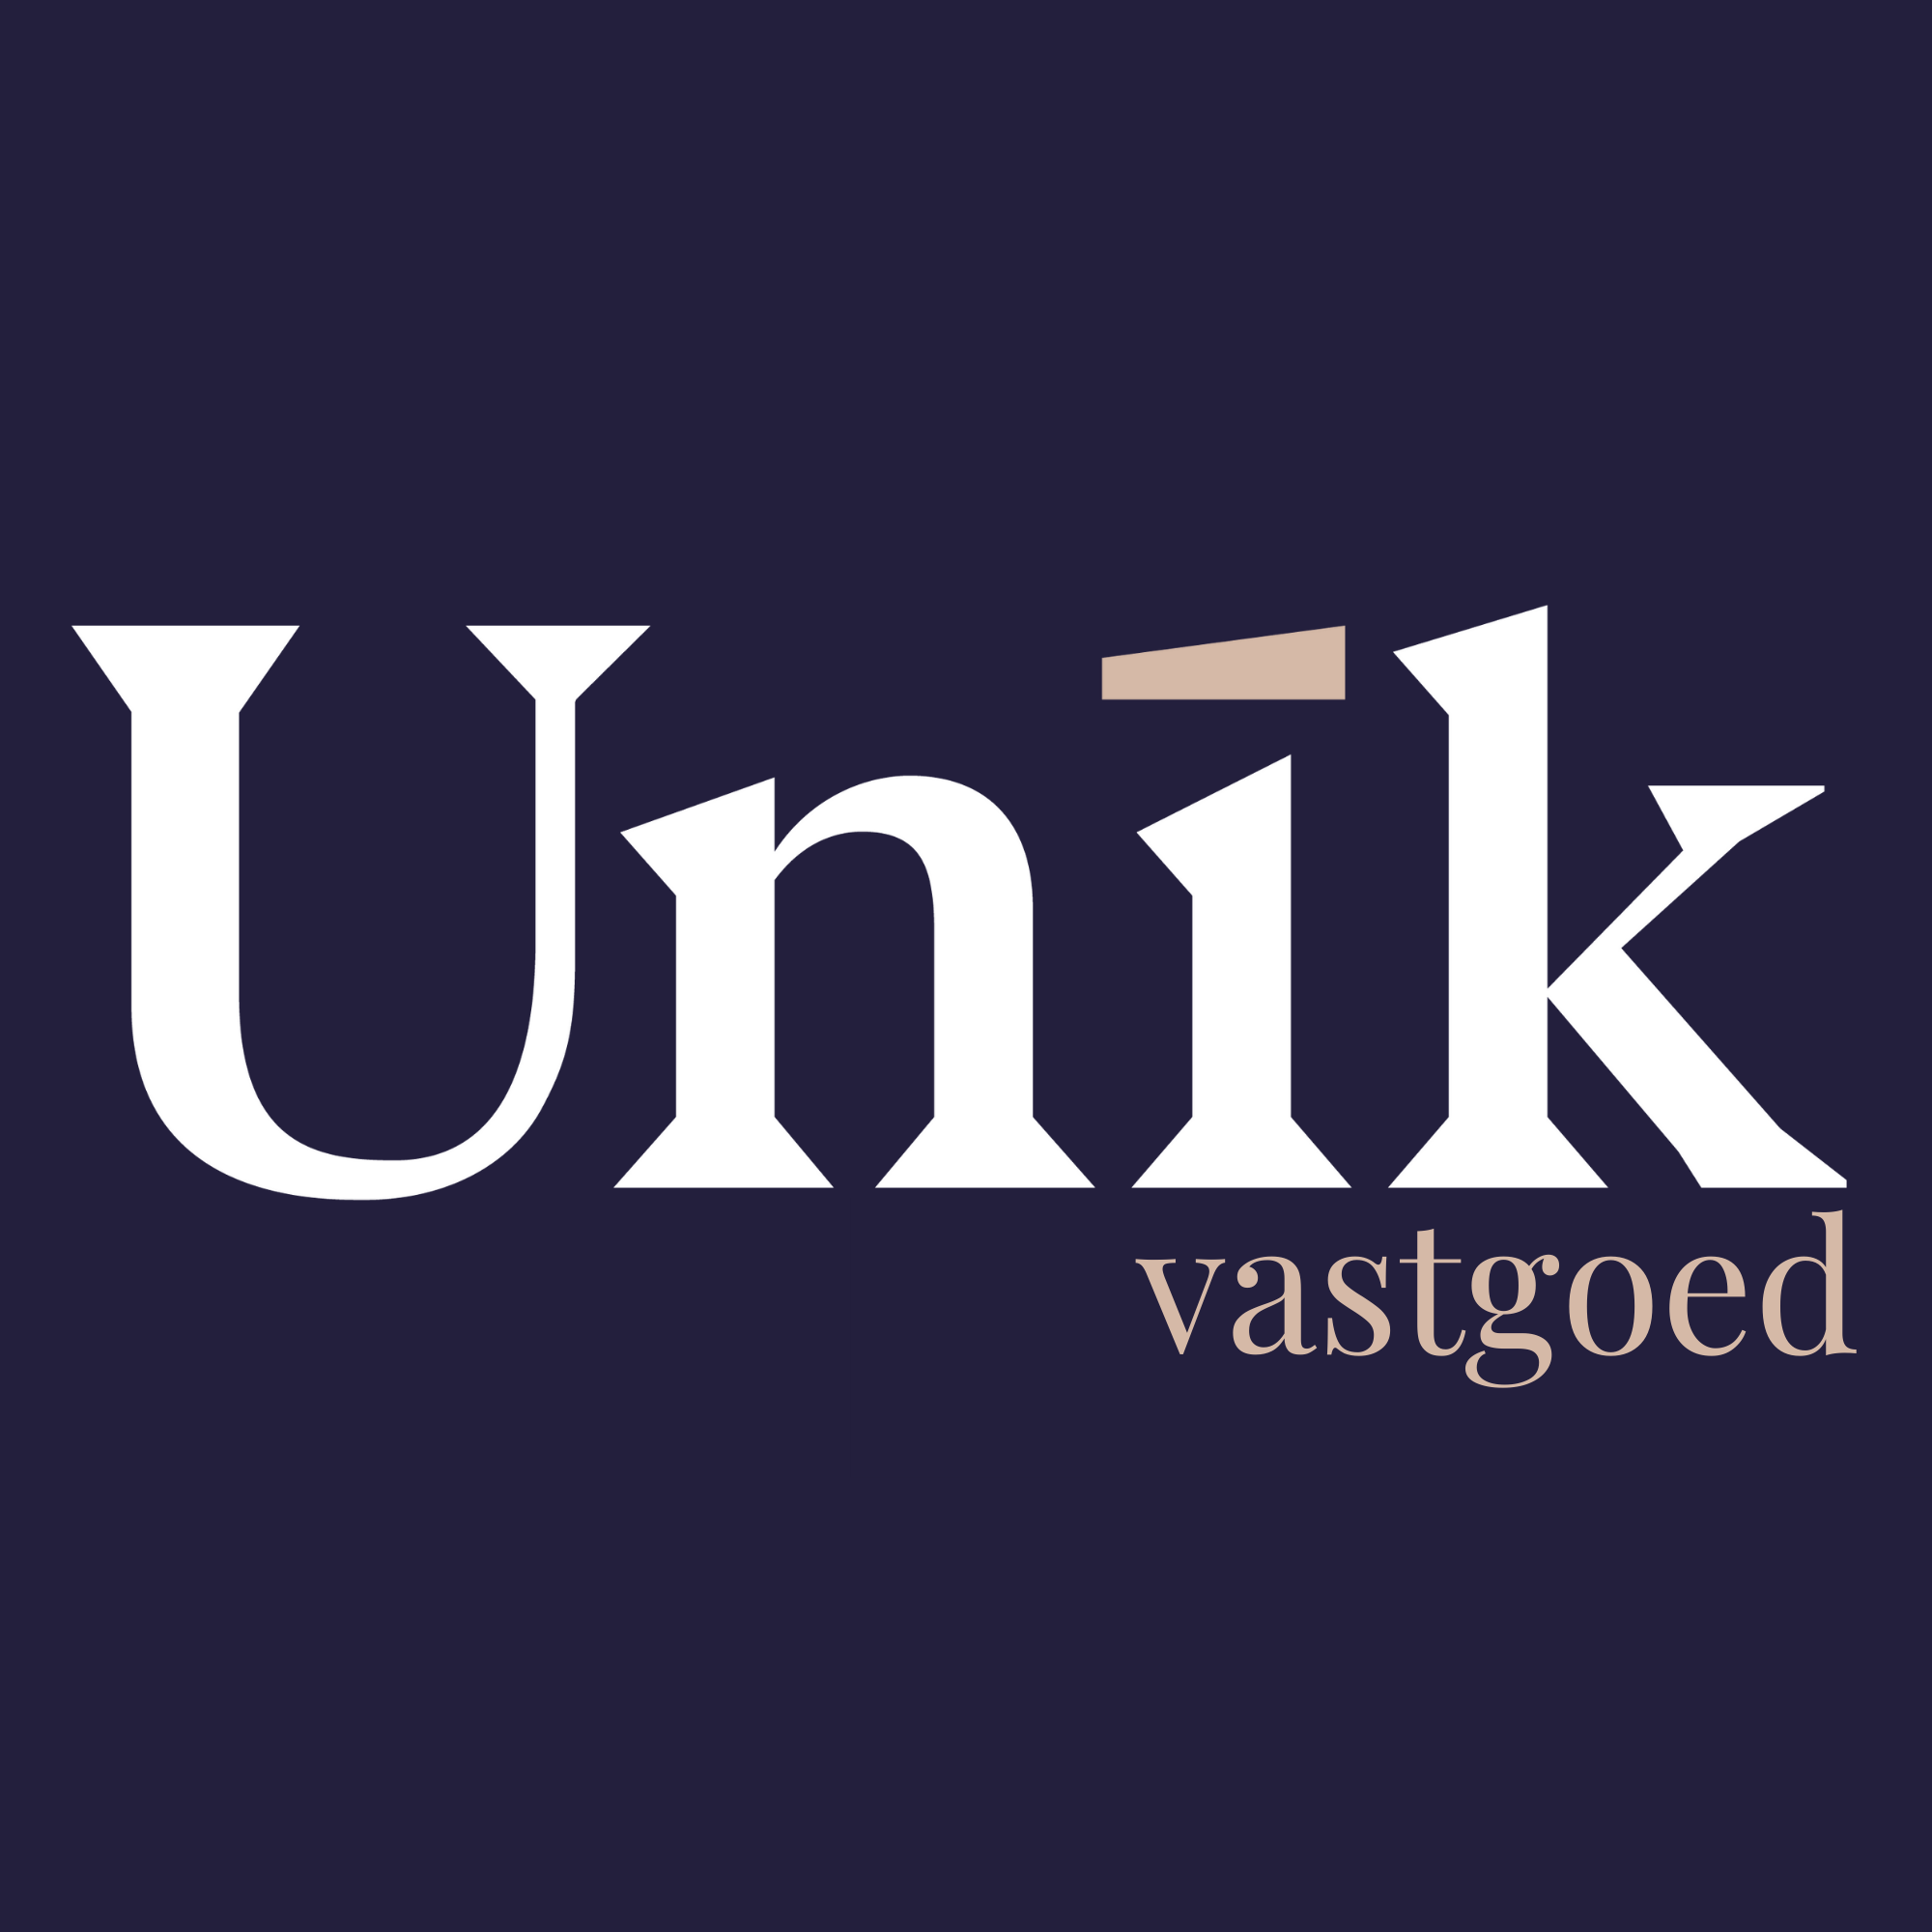 Logo van UNIK vastgoed